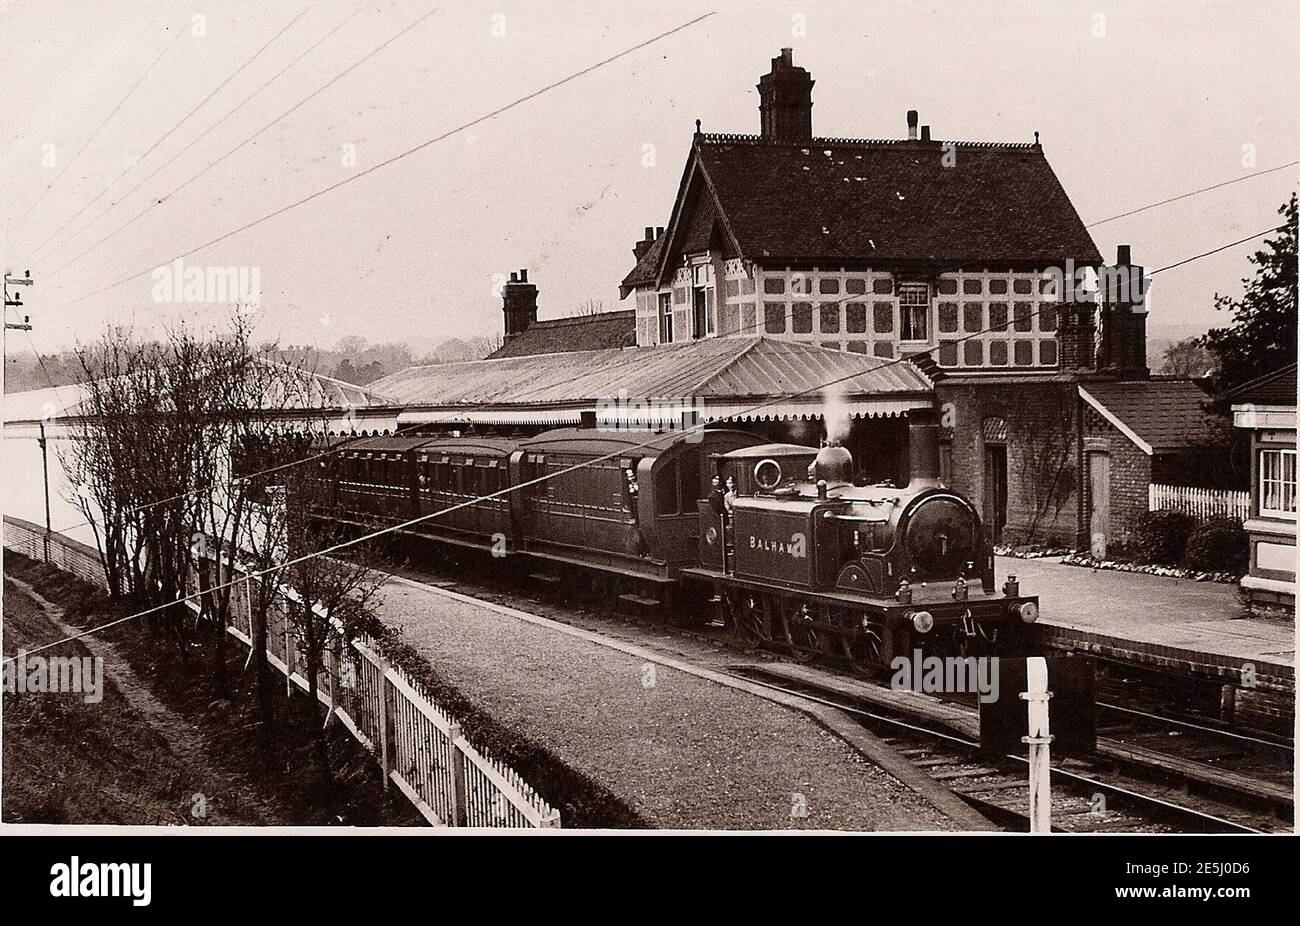 Midhurst (LBSCR) railway station (postcard). Stock Photo